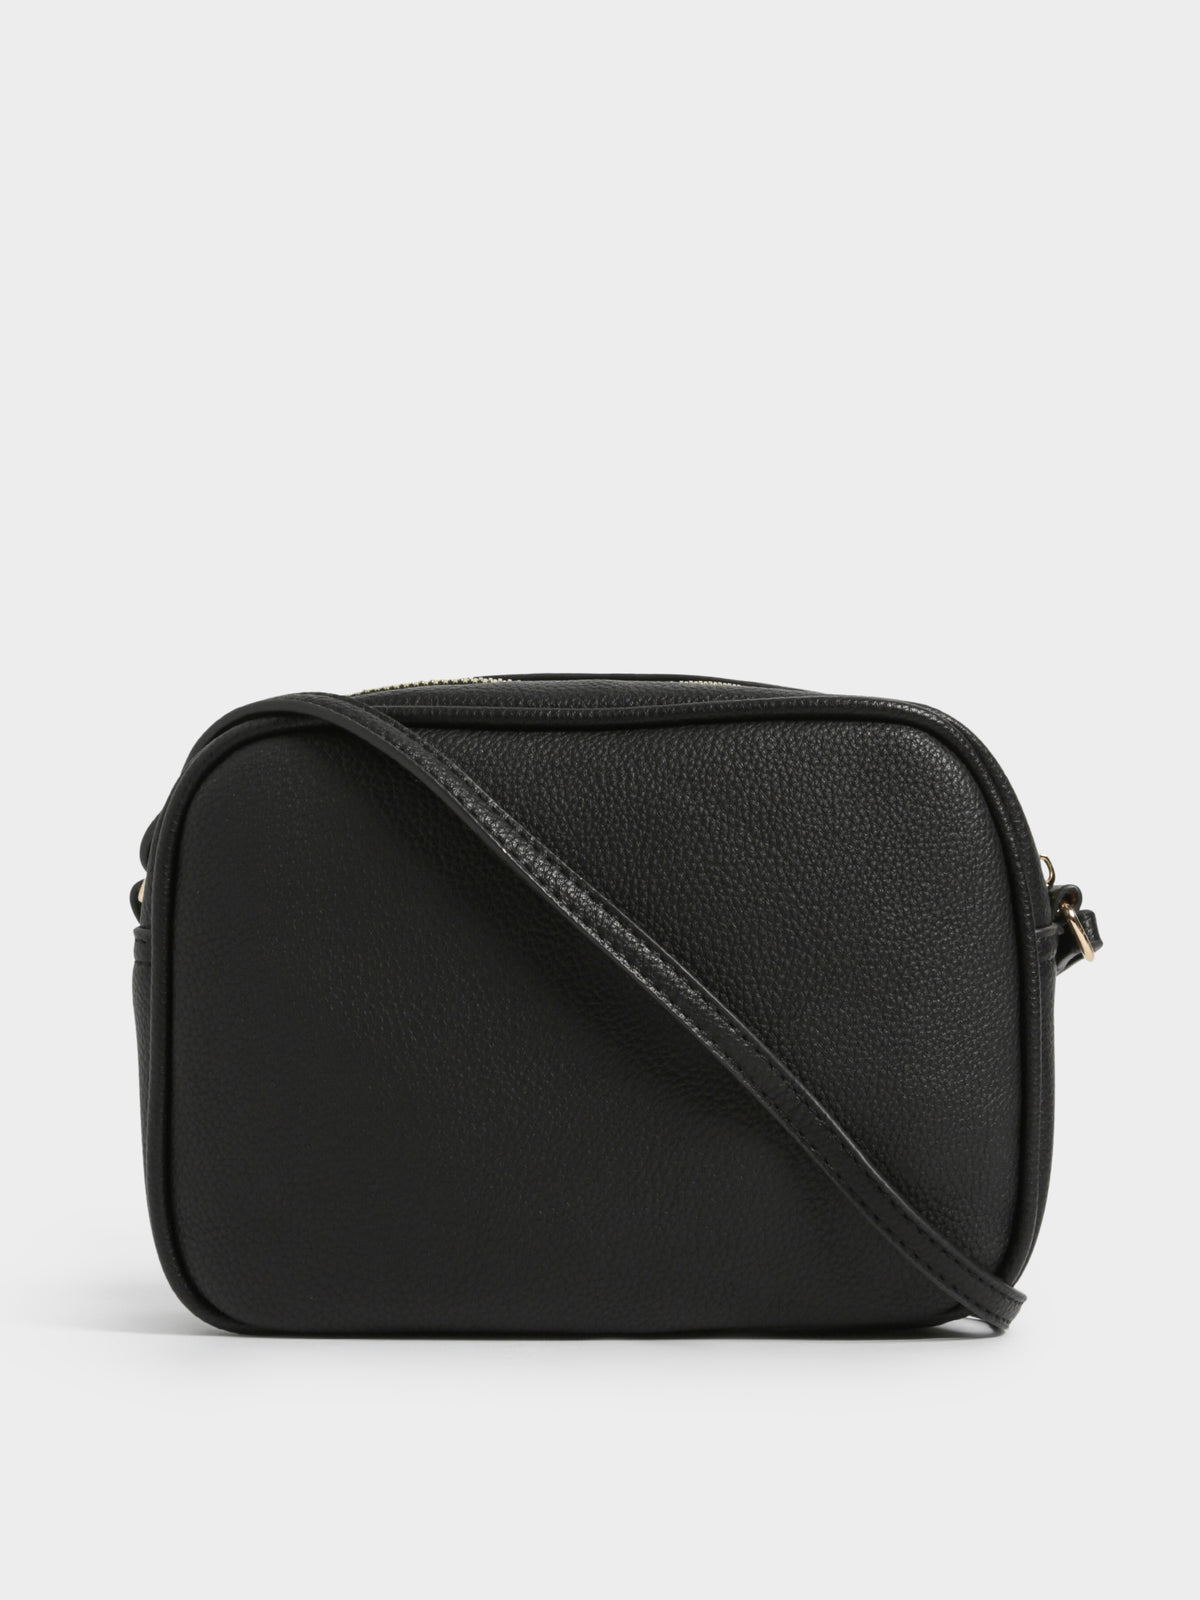 Gracie Quilt Bag in Black